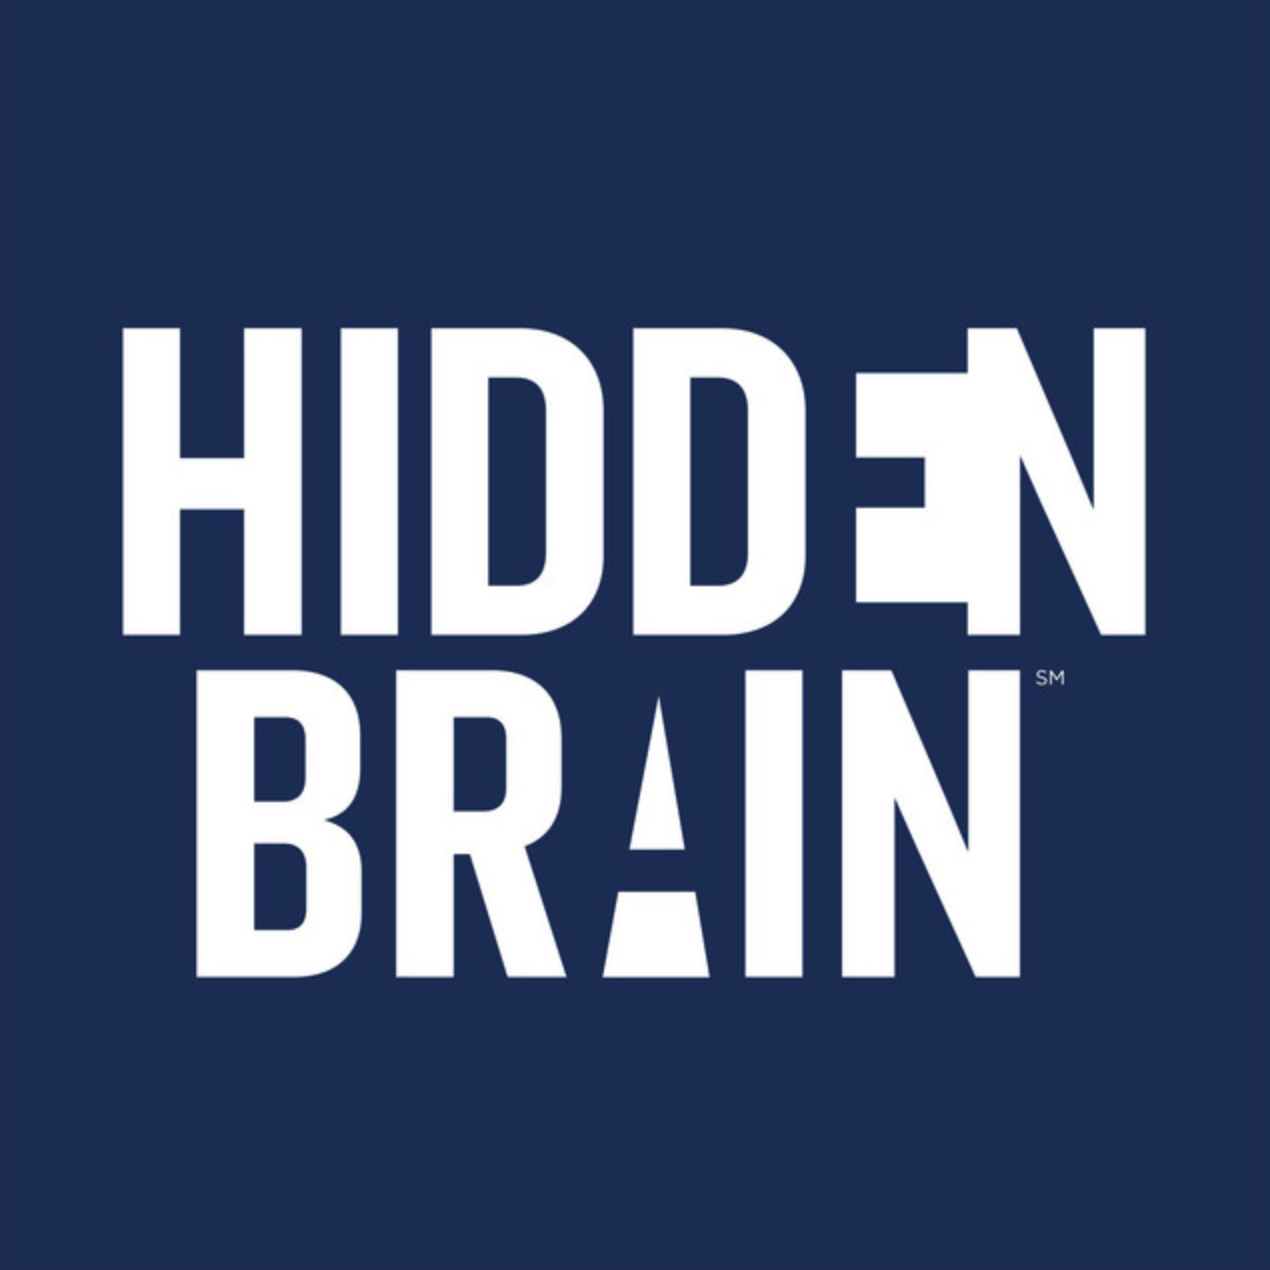 Hidden Brain, our pick for the best marketing podcast for understanding human behavior.